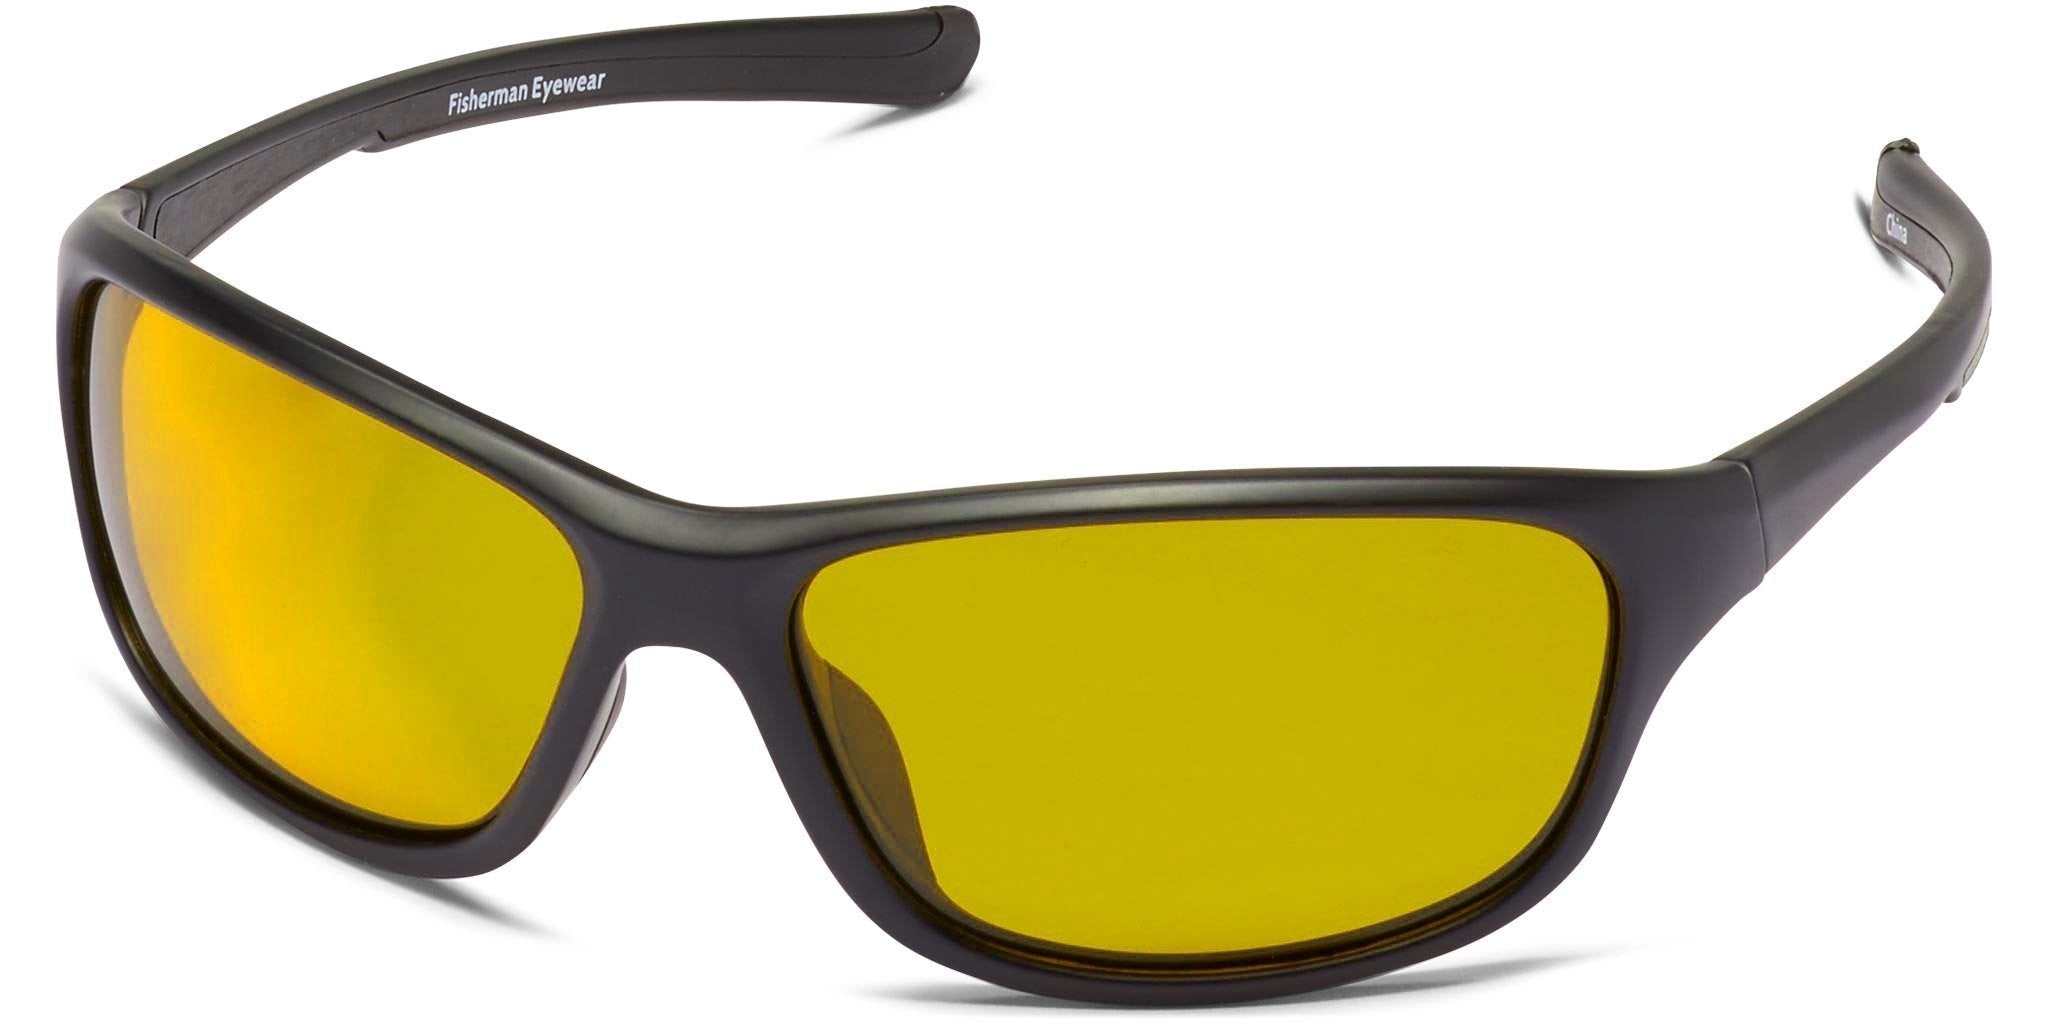 Fisherman Eyewear Cruiser Sunglasses Shiny Black/ Grey Lens